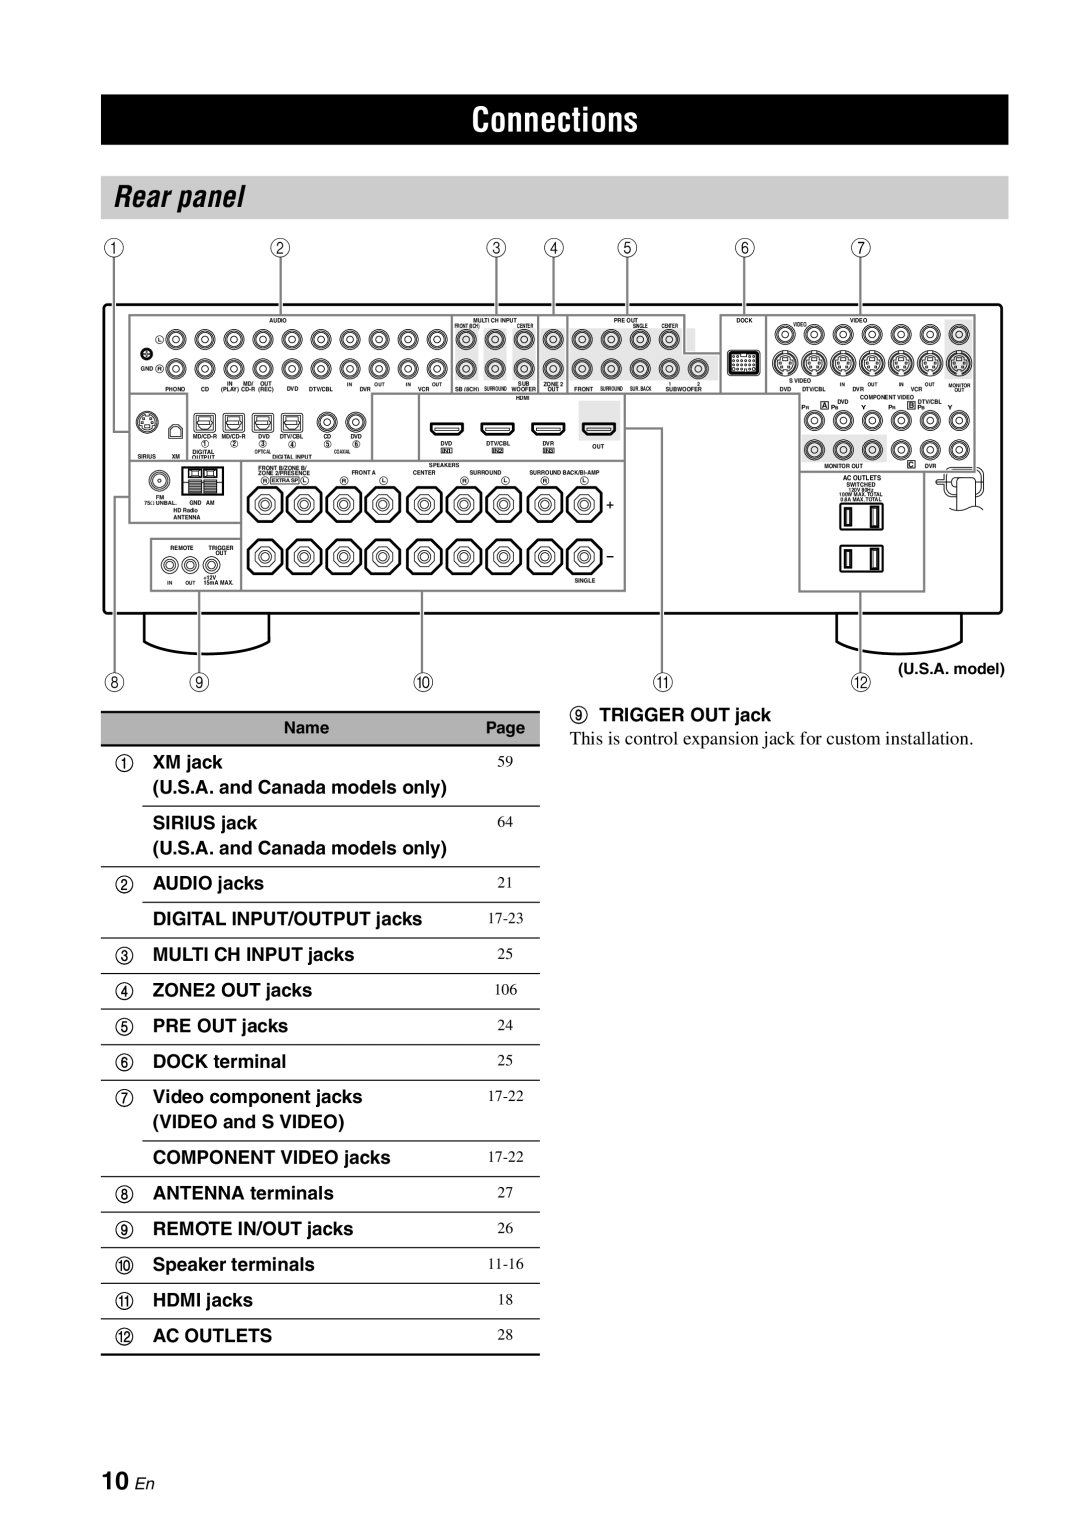 Yamaha HTR-6180 owner manual Rear panel, 10 En, Connections 